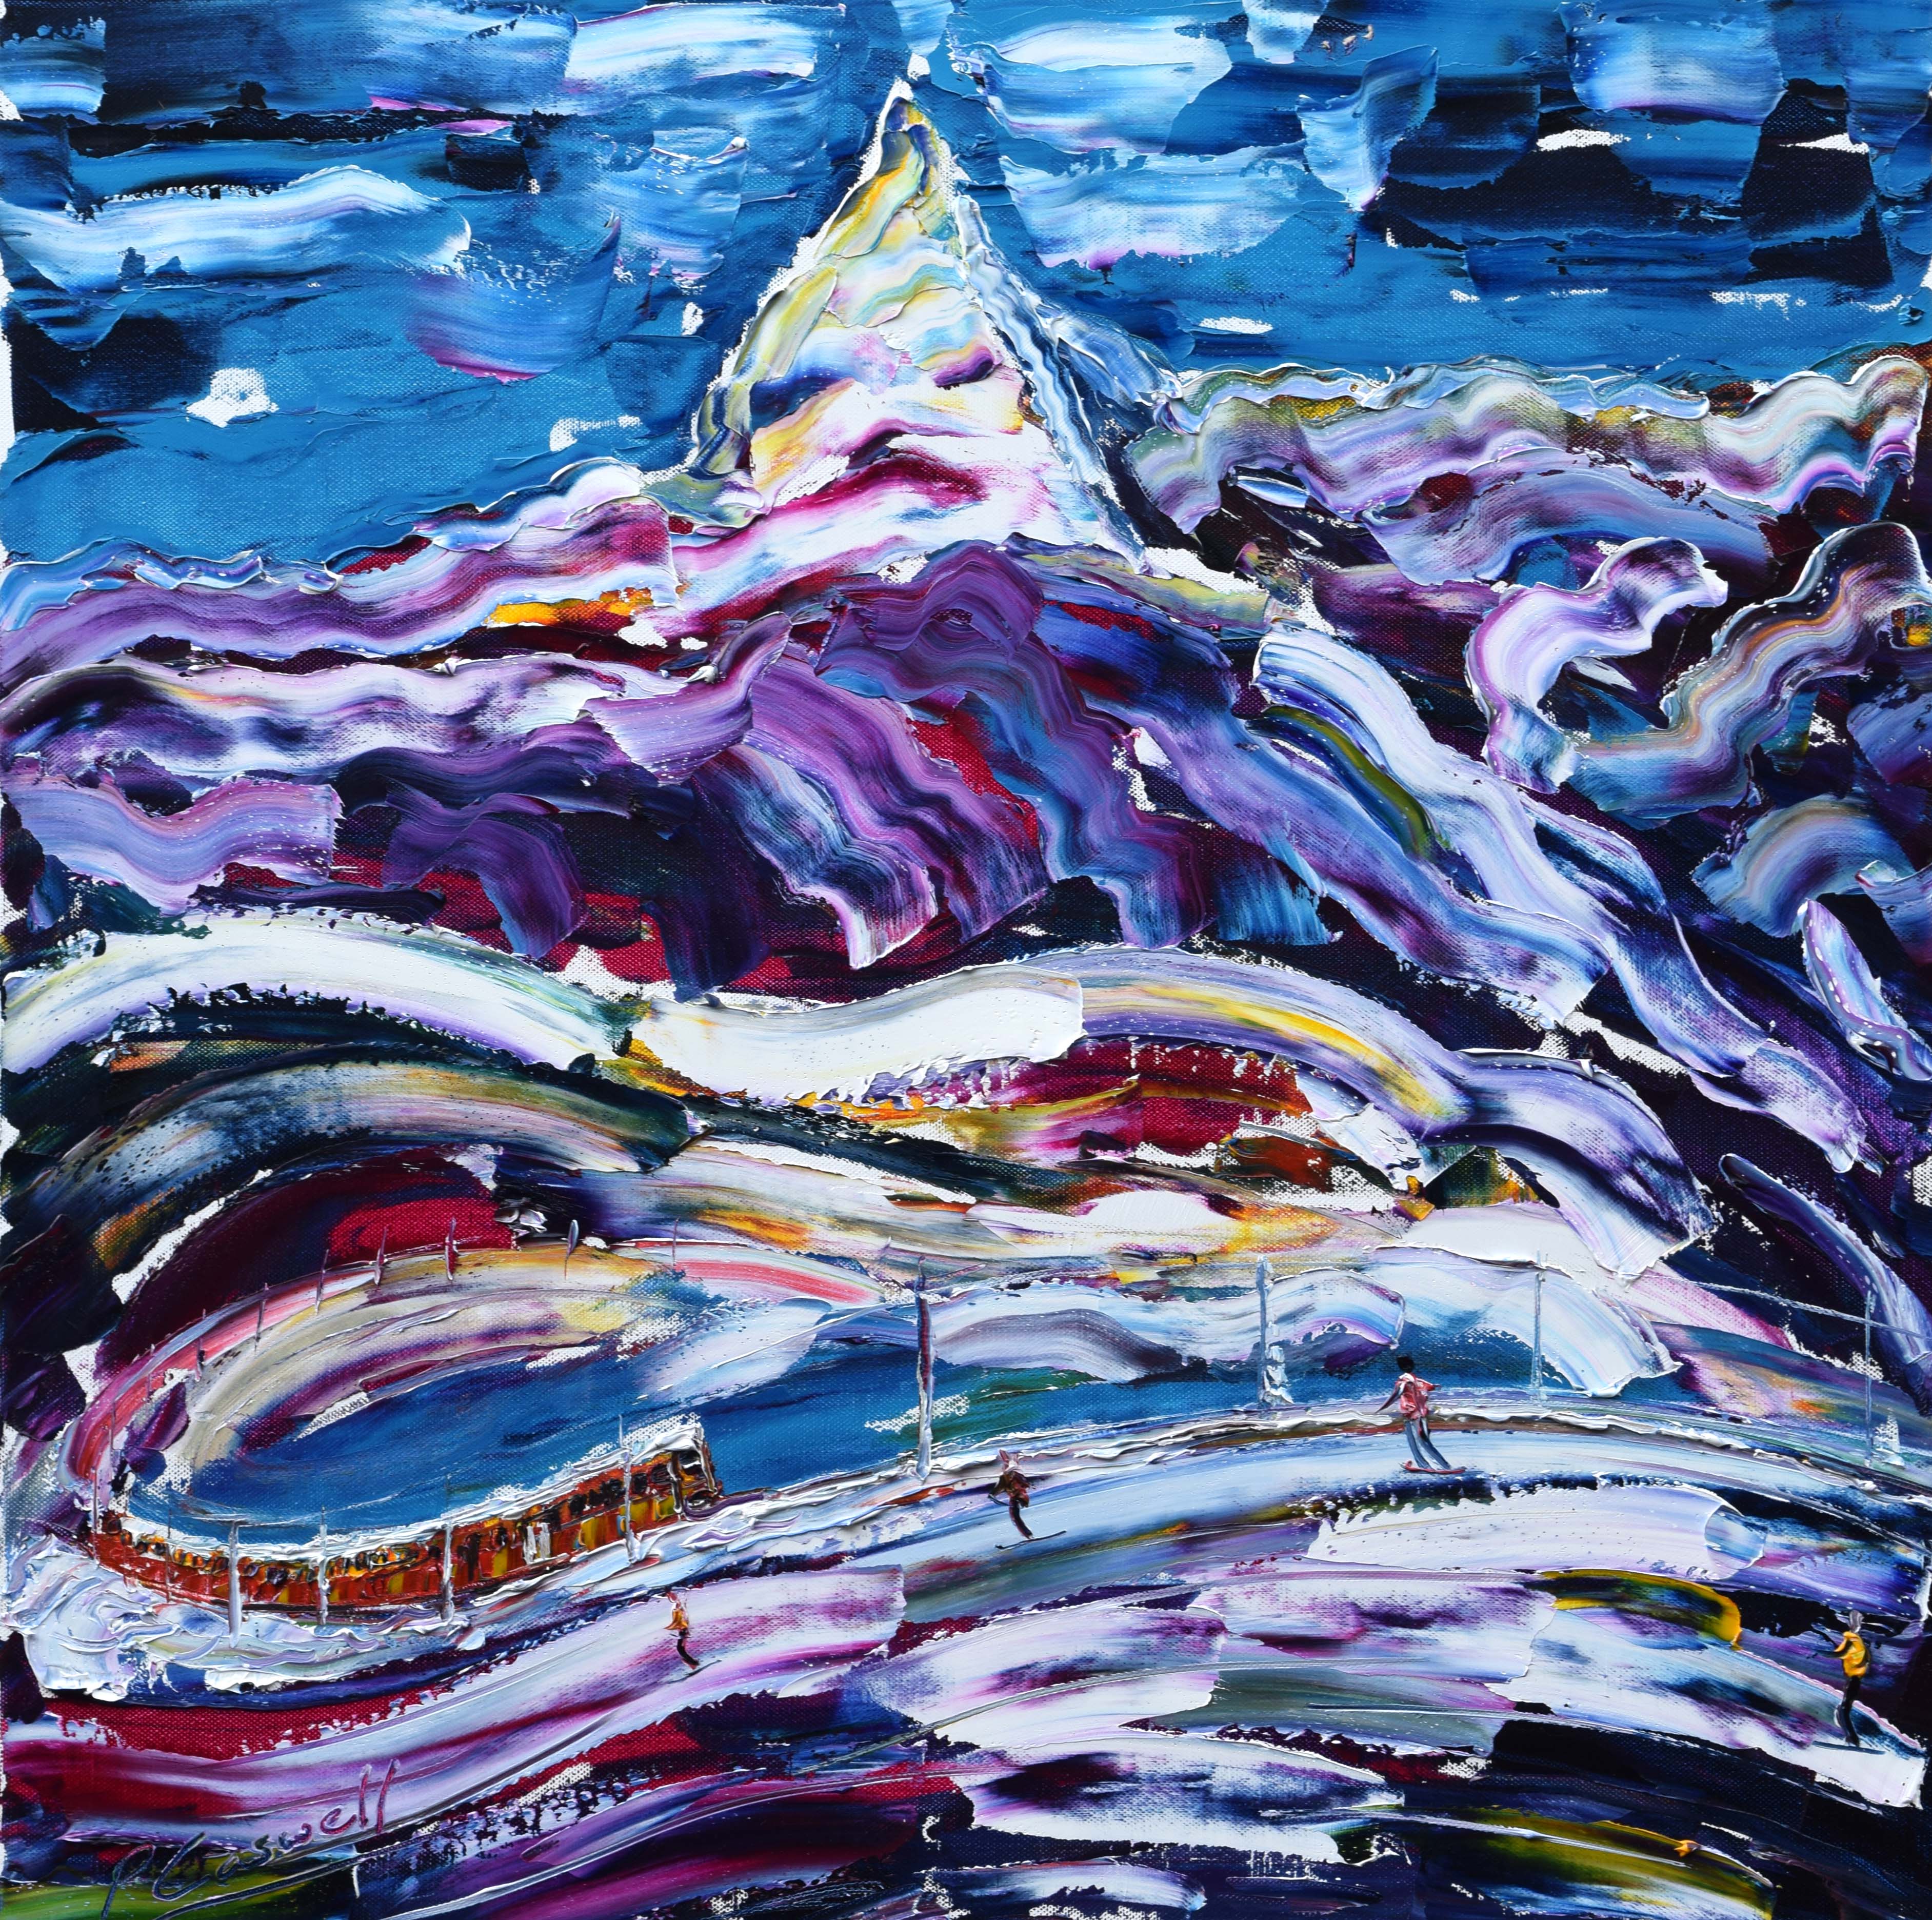 Zermatt Matterhorn pistes and mountain railway painting for sale